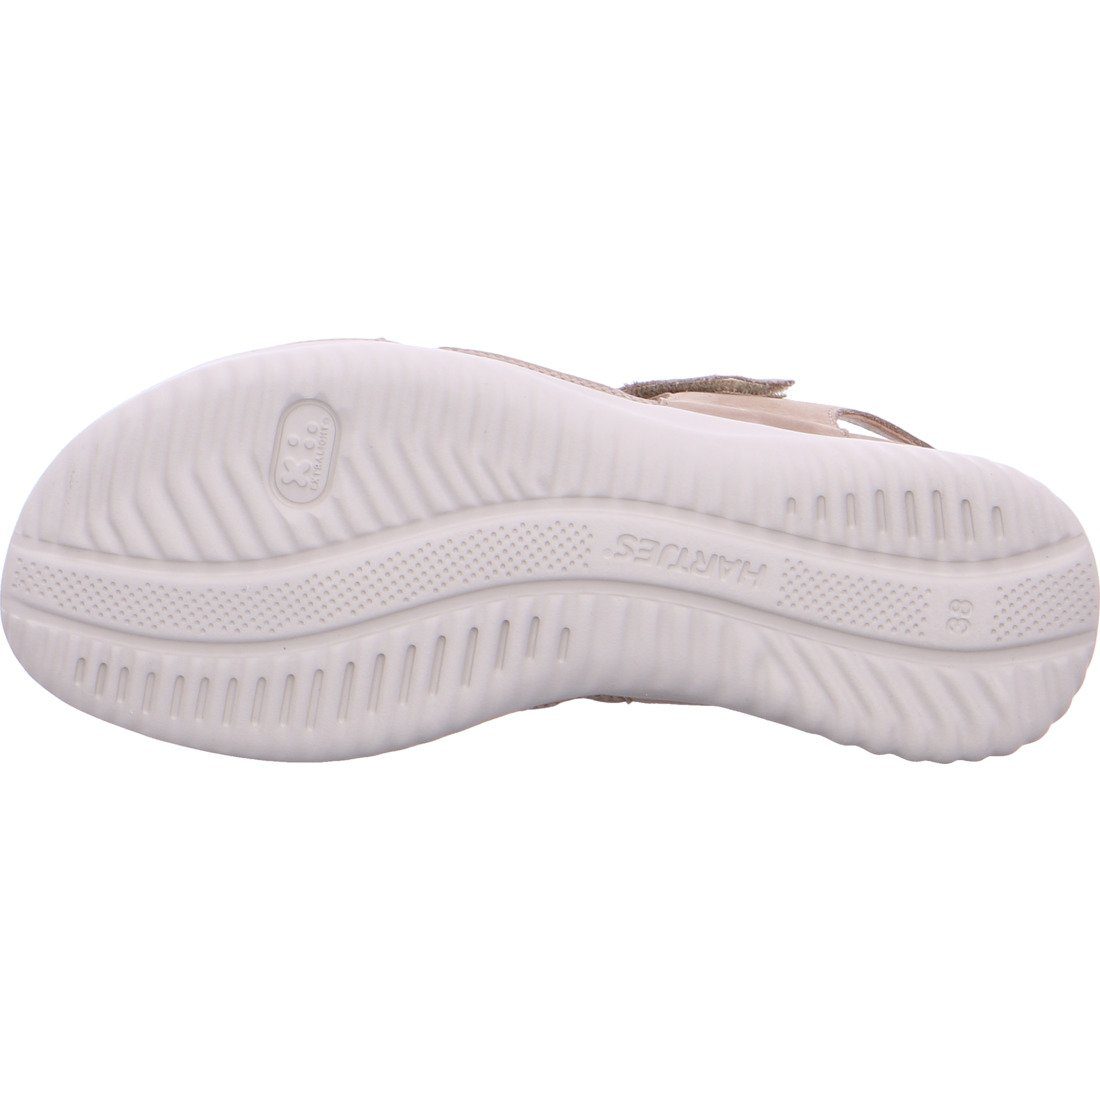 Damen Hartjes Hartjes - Sandalette Sandalette rot 042619 Nubuk Schuhe, Breeze